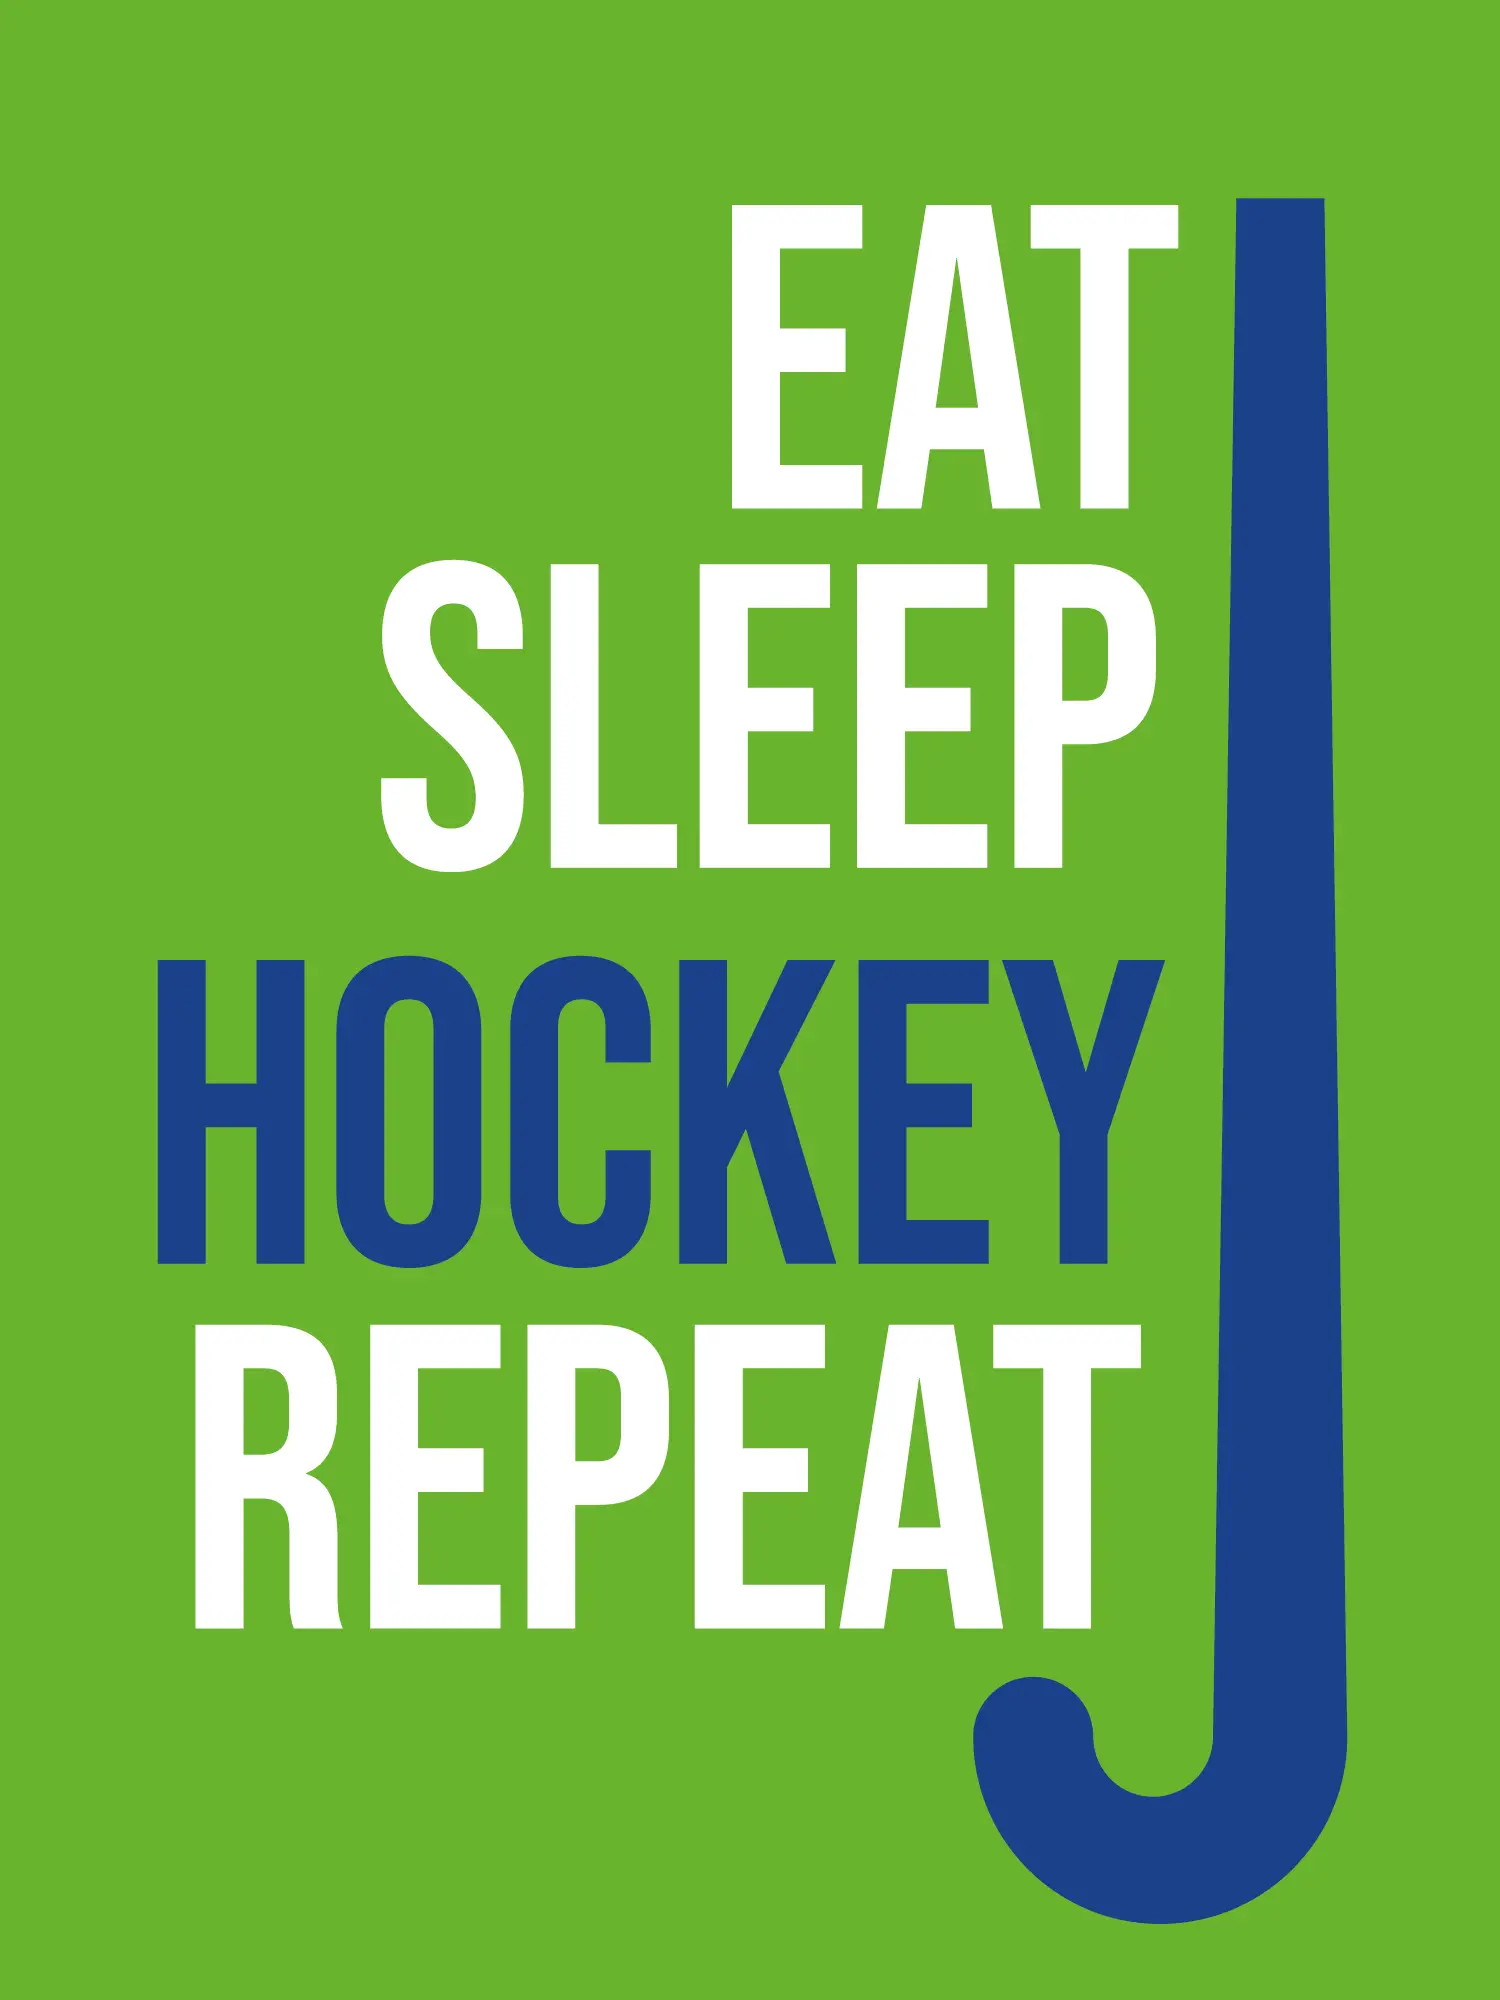 Eat, Sleep, Hockey, Repeat Cake Card